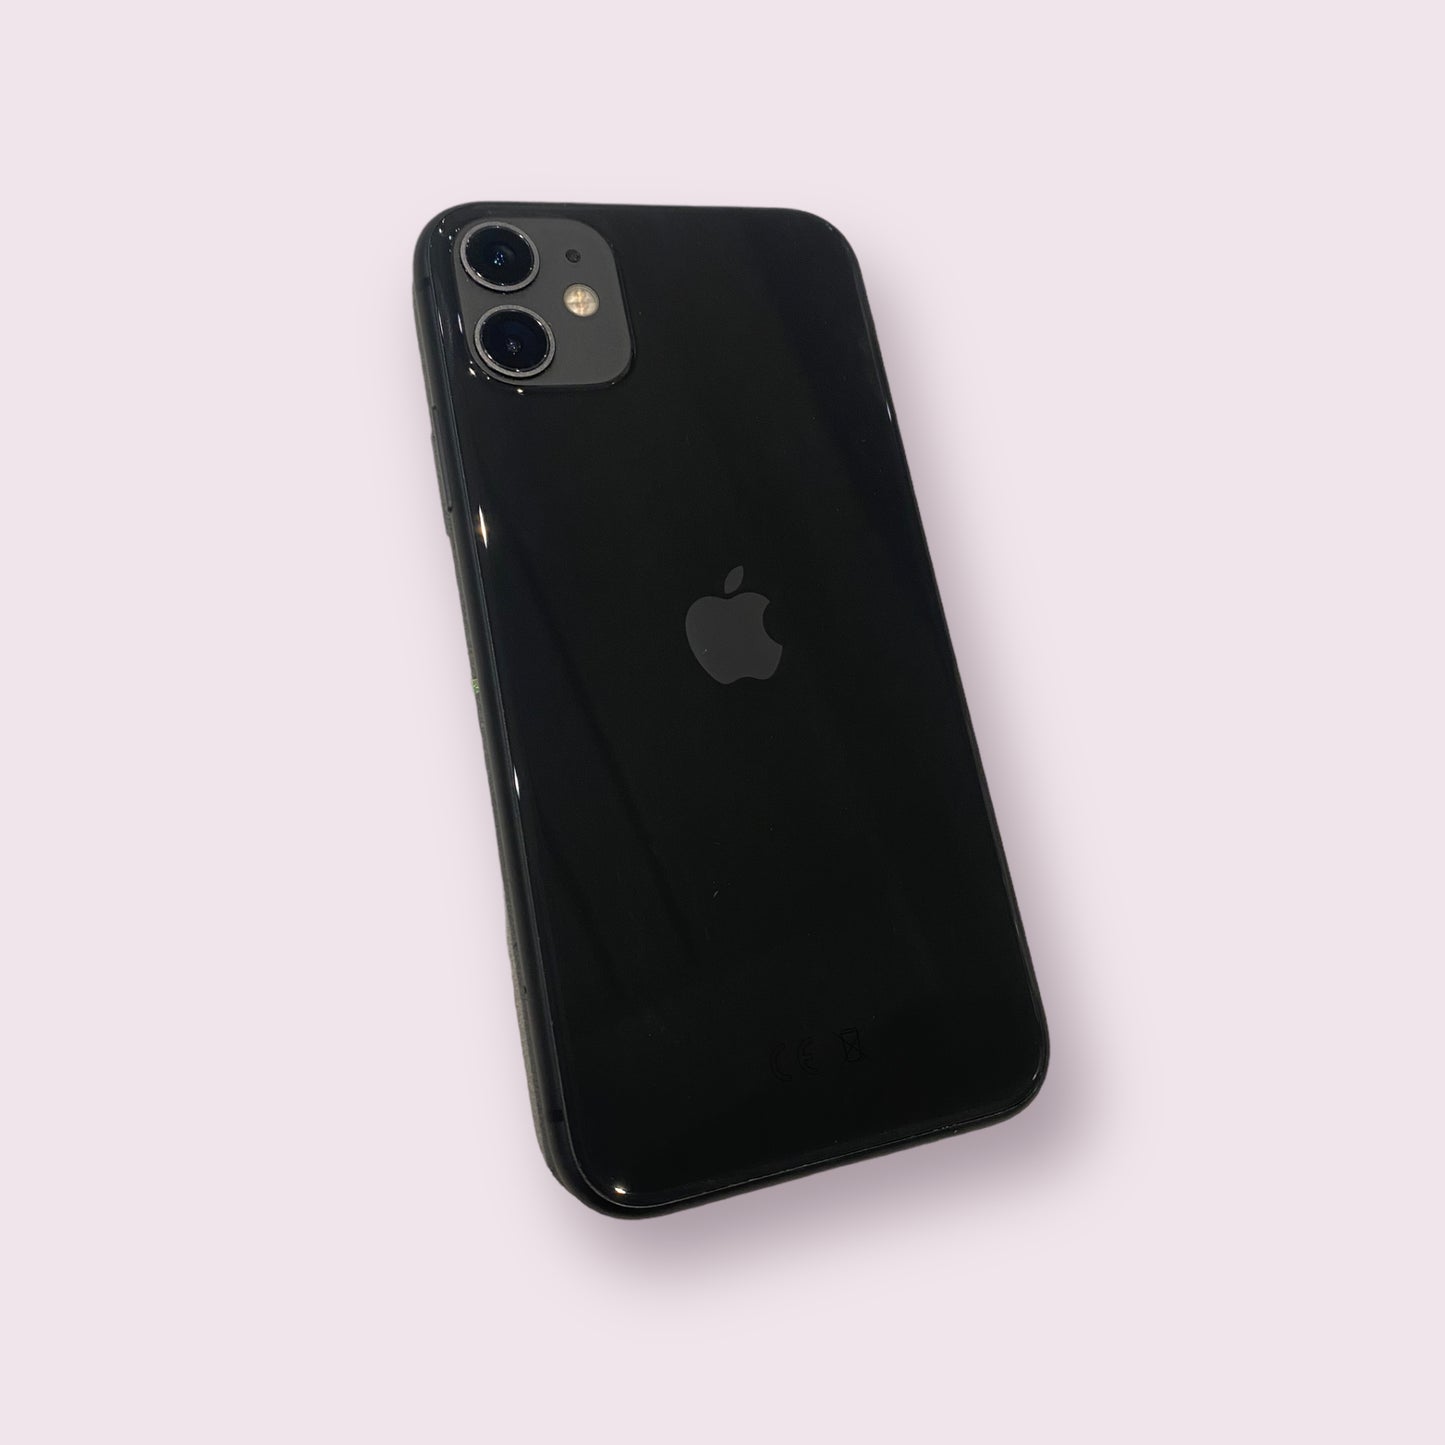 Apple iPhone 11 128GB Black Smartphone - Unlocked - Grade A - BH 100%